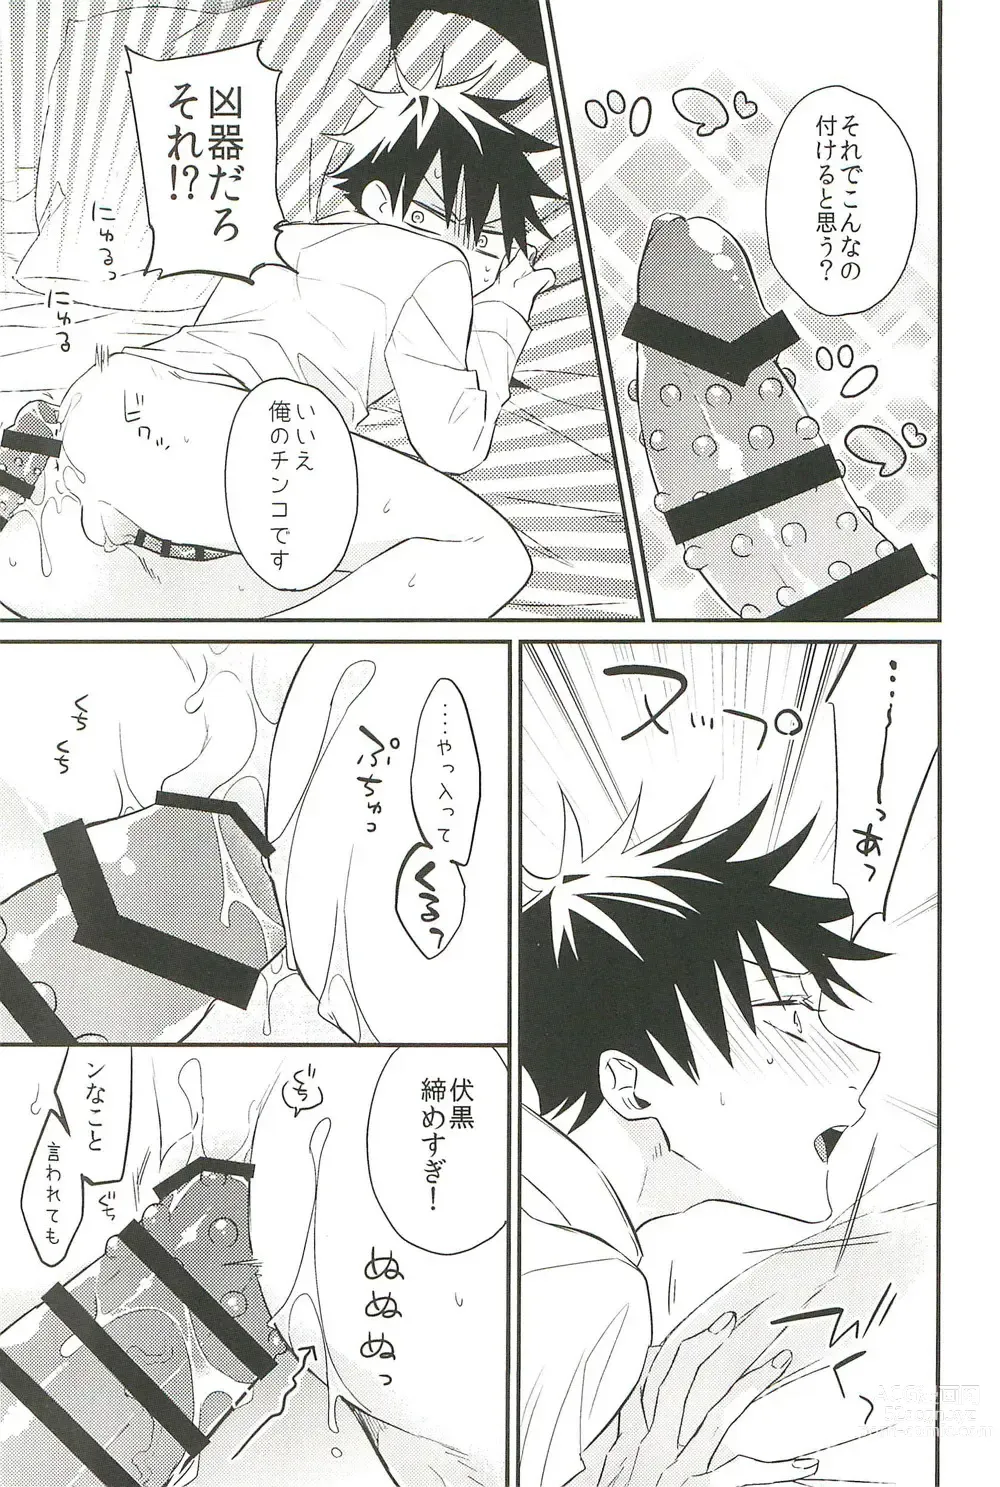 Page 45 of doujinshi 10+